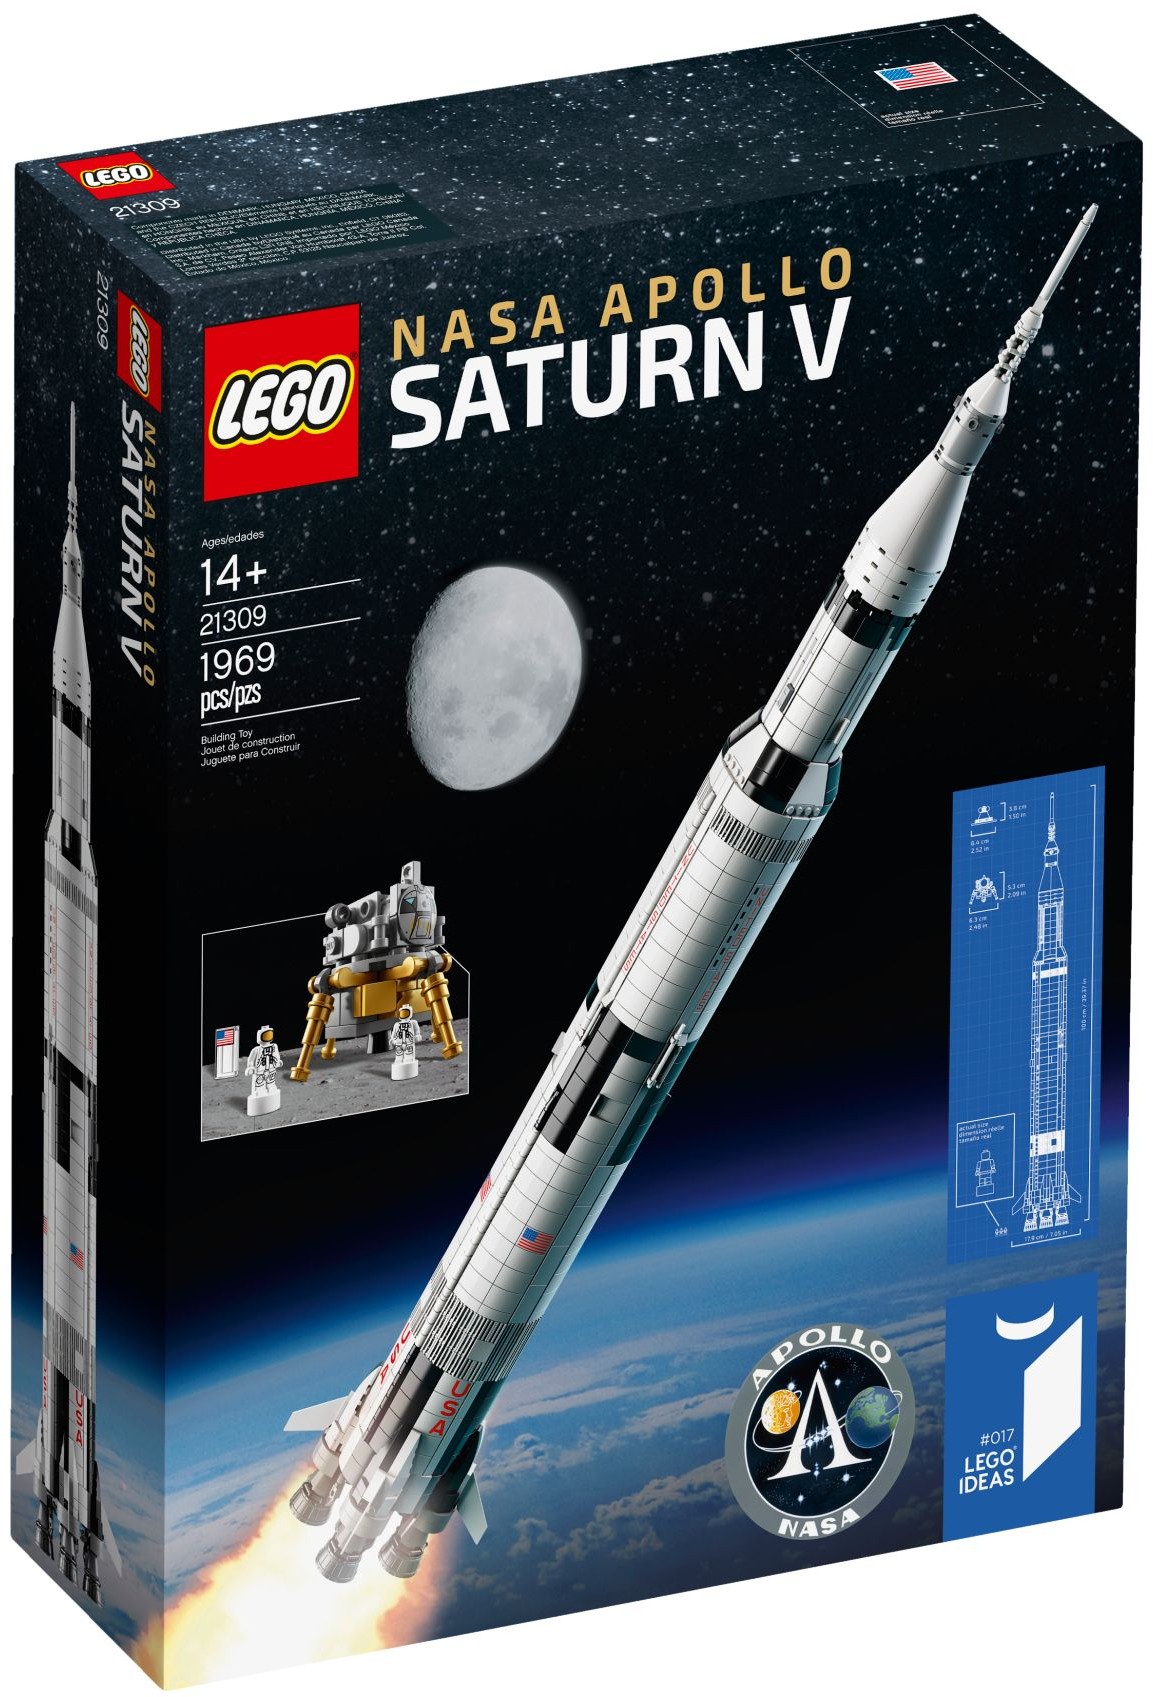 New LEGO 21309 Space Ideas NASA Apollo Saturn V Sealed 